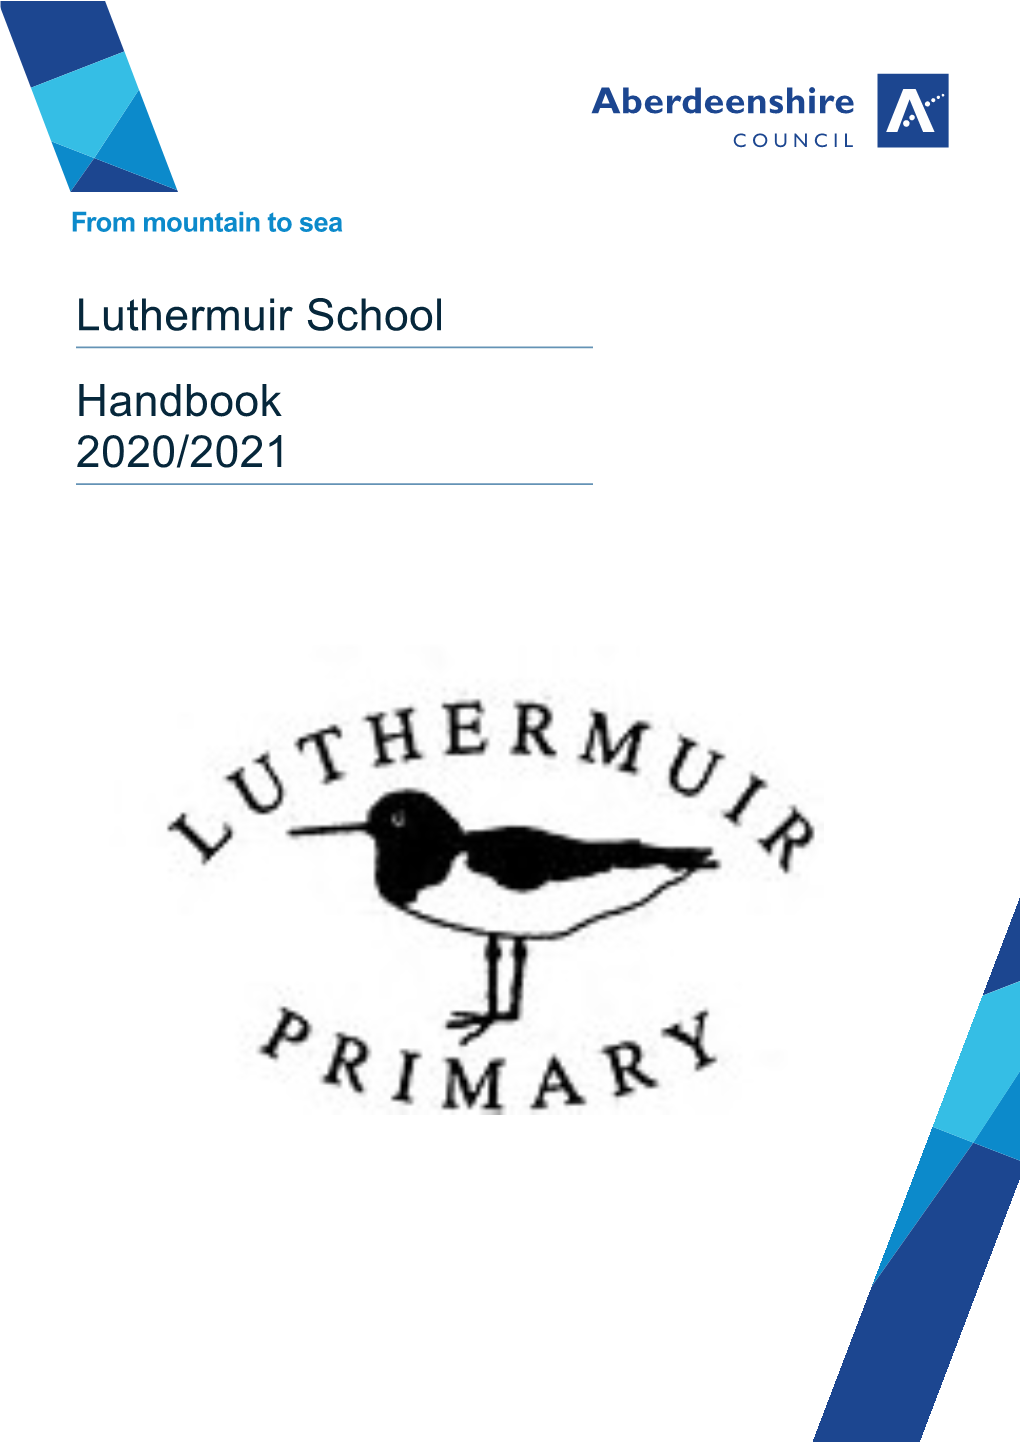 Luthermuir School Handbook 2020/2021